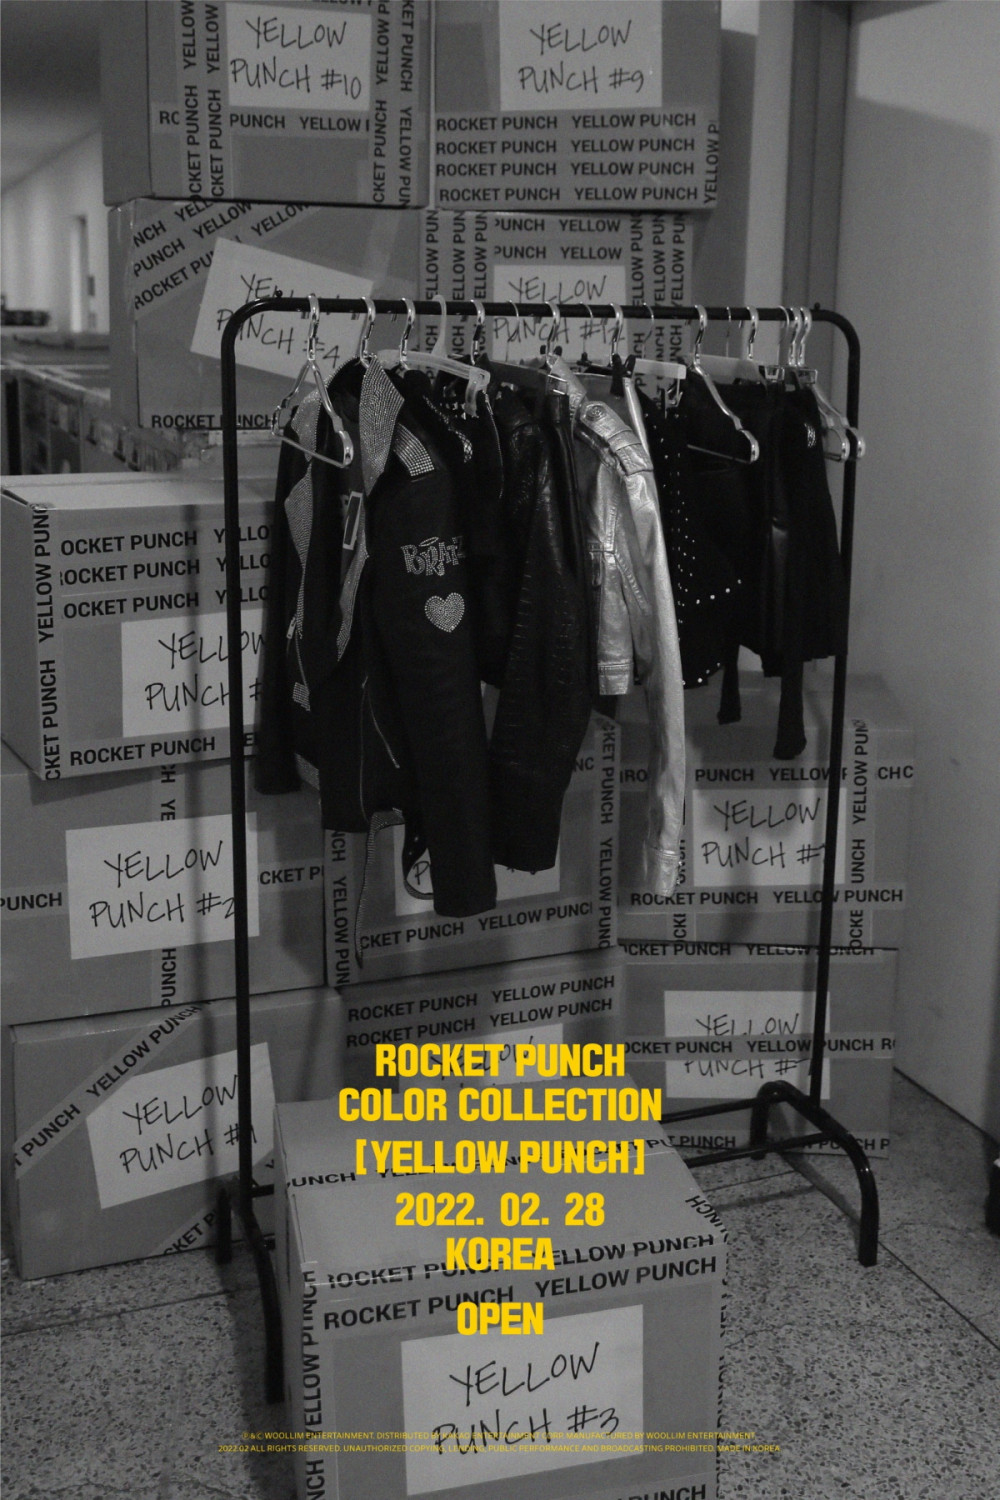 [Камбэк] Rocket Punch альбом «Color Collection: Yellow Punch»: музыкальный клип